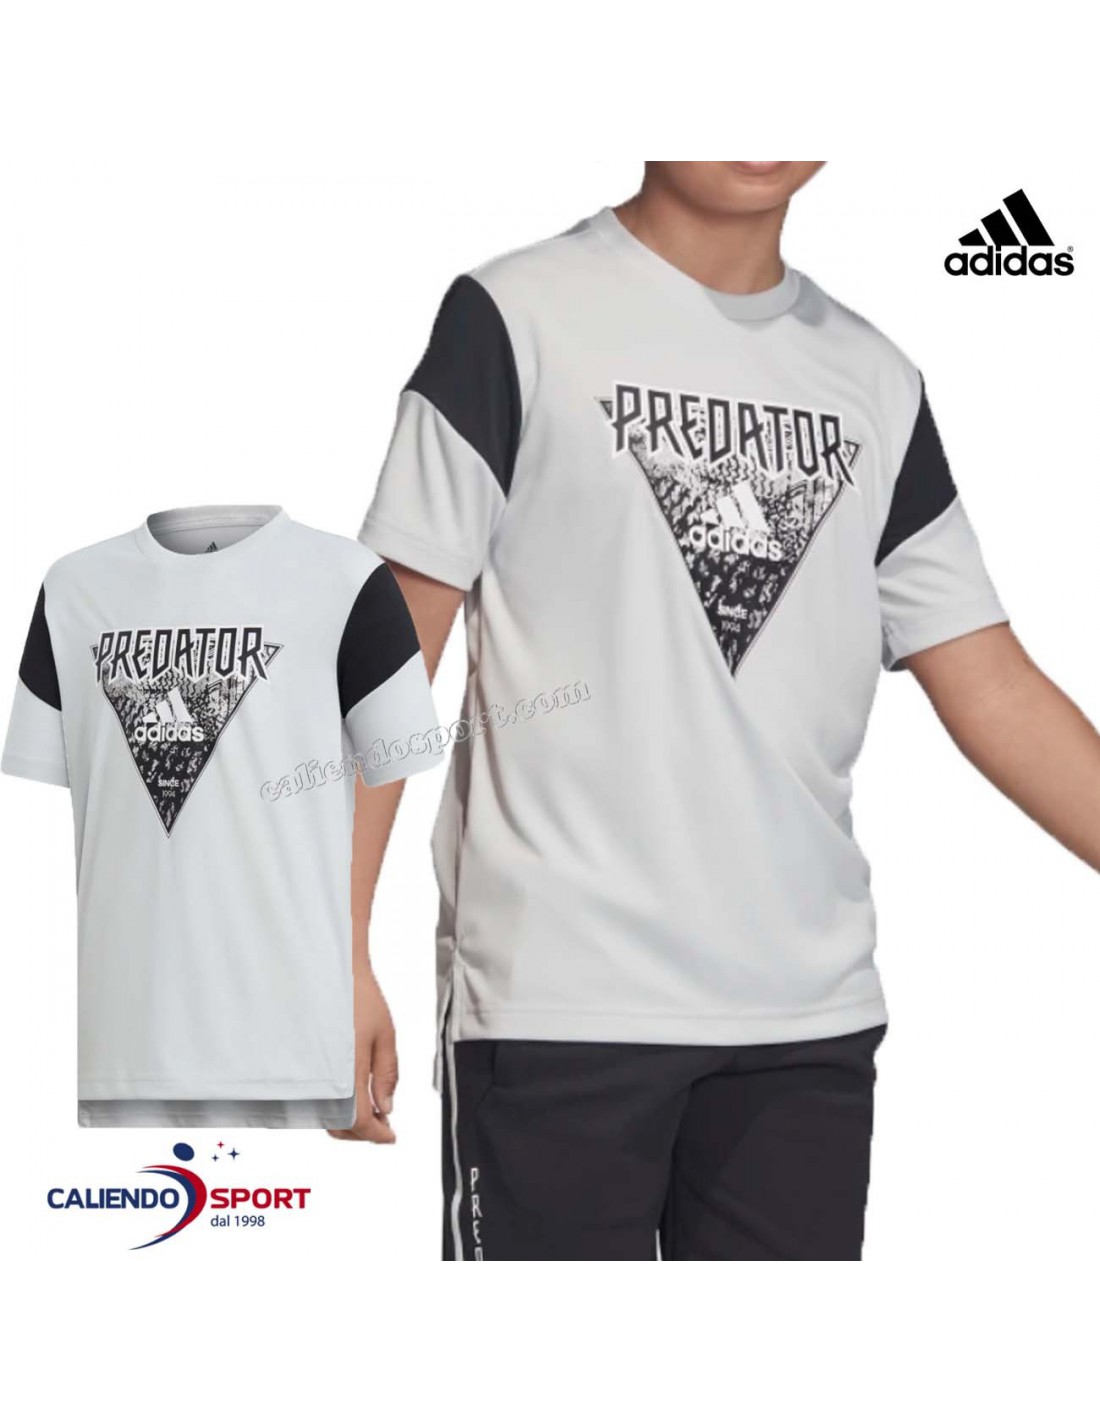 Marca adidasadidas Predator T-Shirt Bambini e Ragazzi 